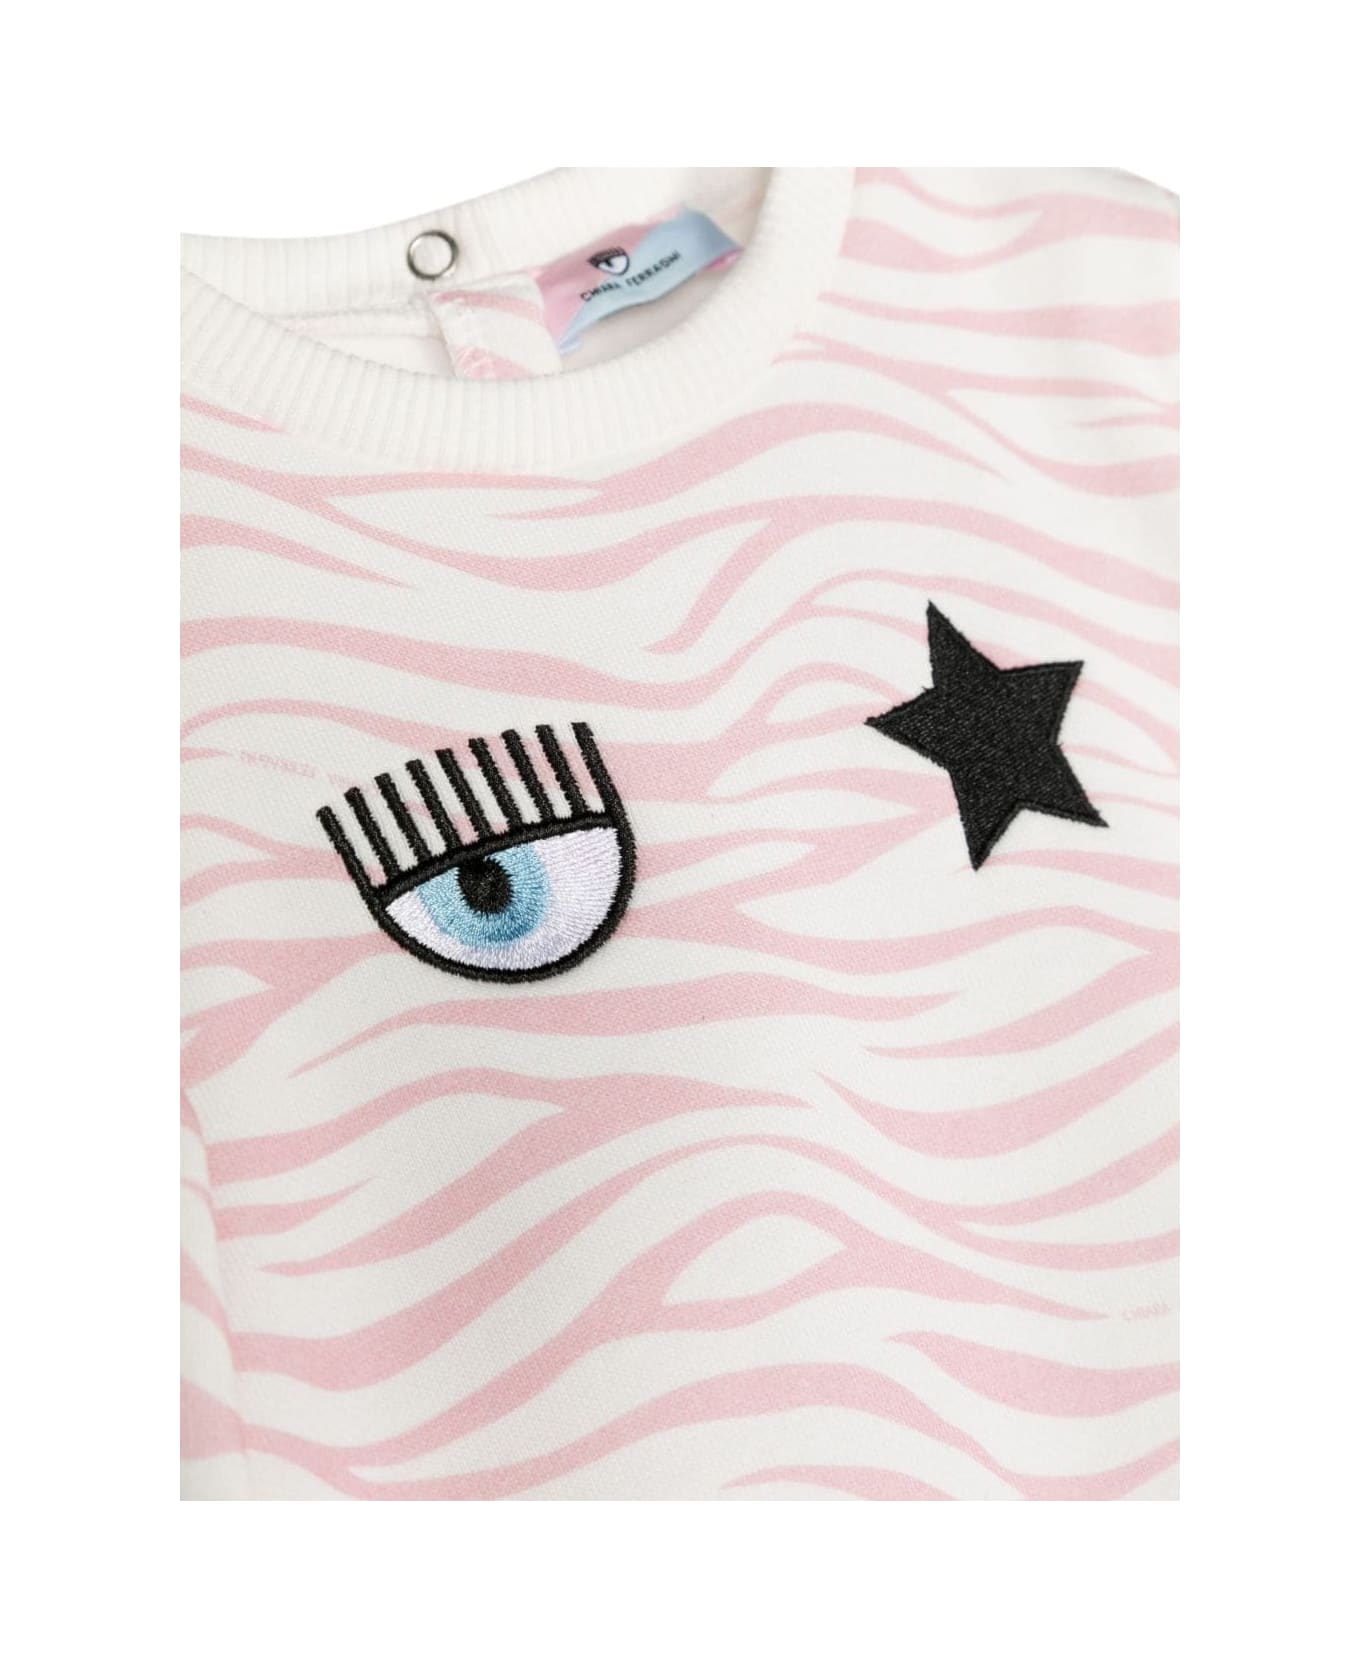 Chiara Ferragni Multicolor Sweatshirt For Baby Girl With Eyestar - Multicolor